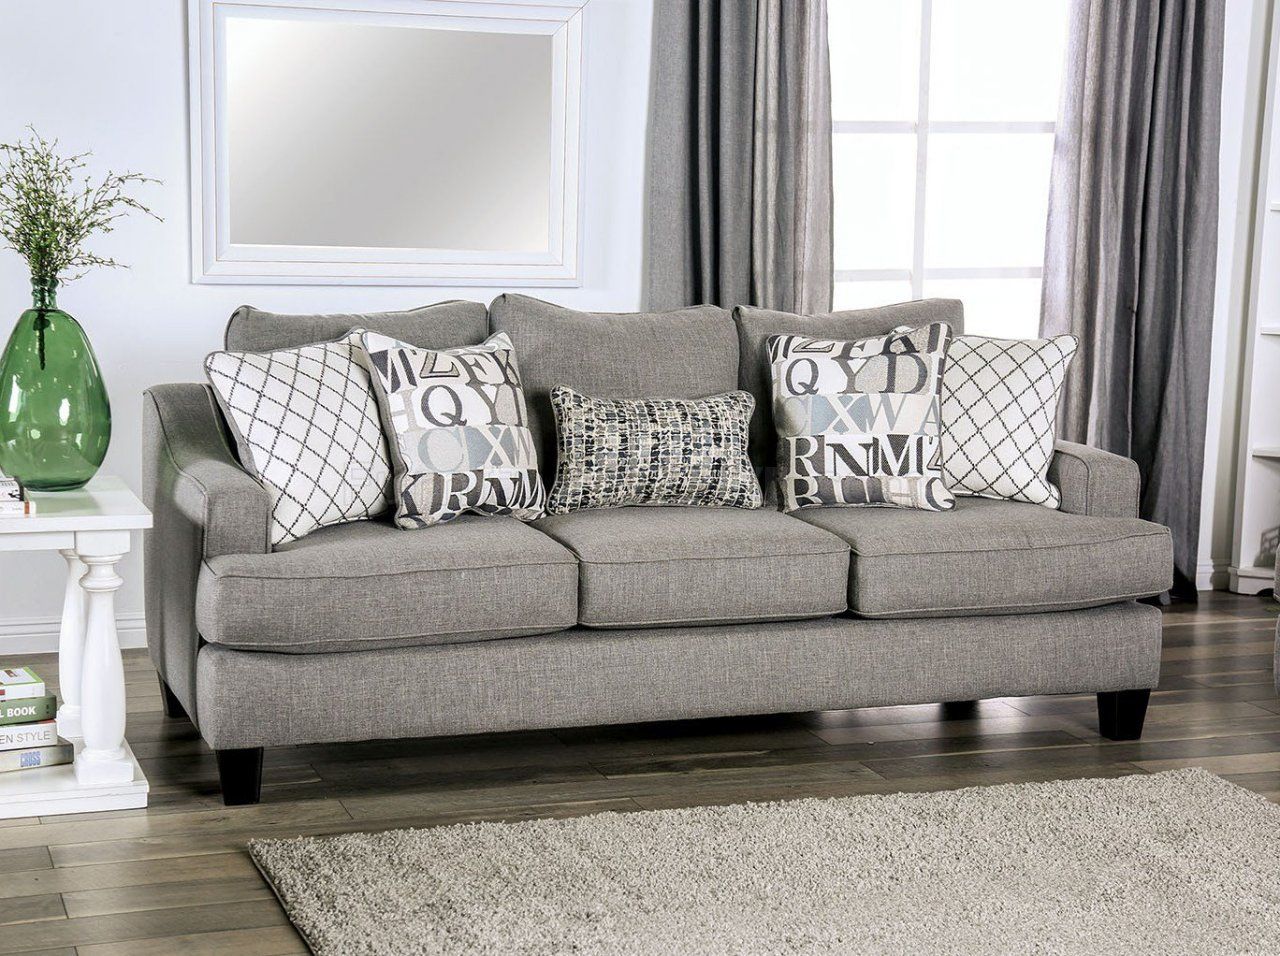 Verne Sofa Sm8330 In Bluish Gray Linen Like Fabric W/options Regarding Sofas In Bluish Grey (View 8 of 20)